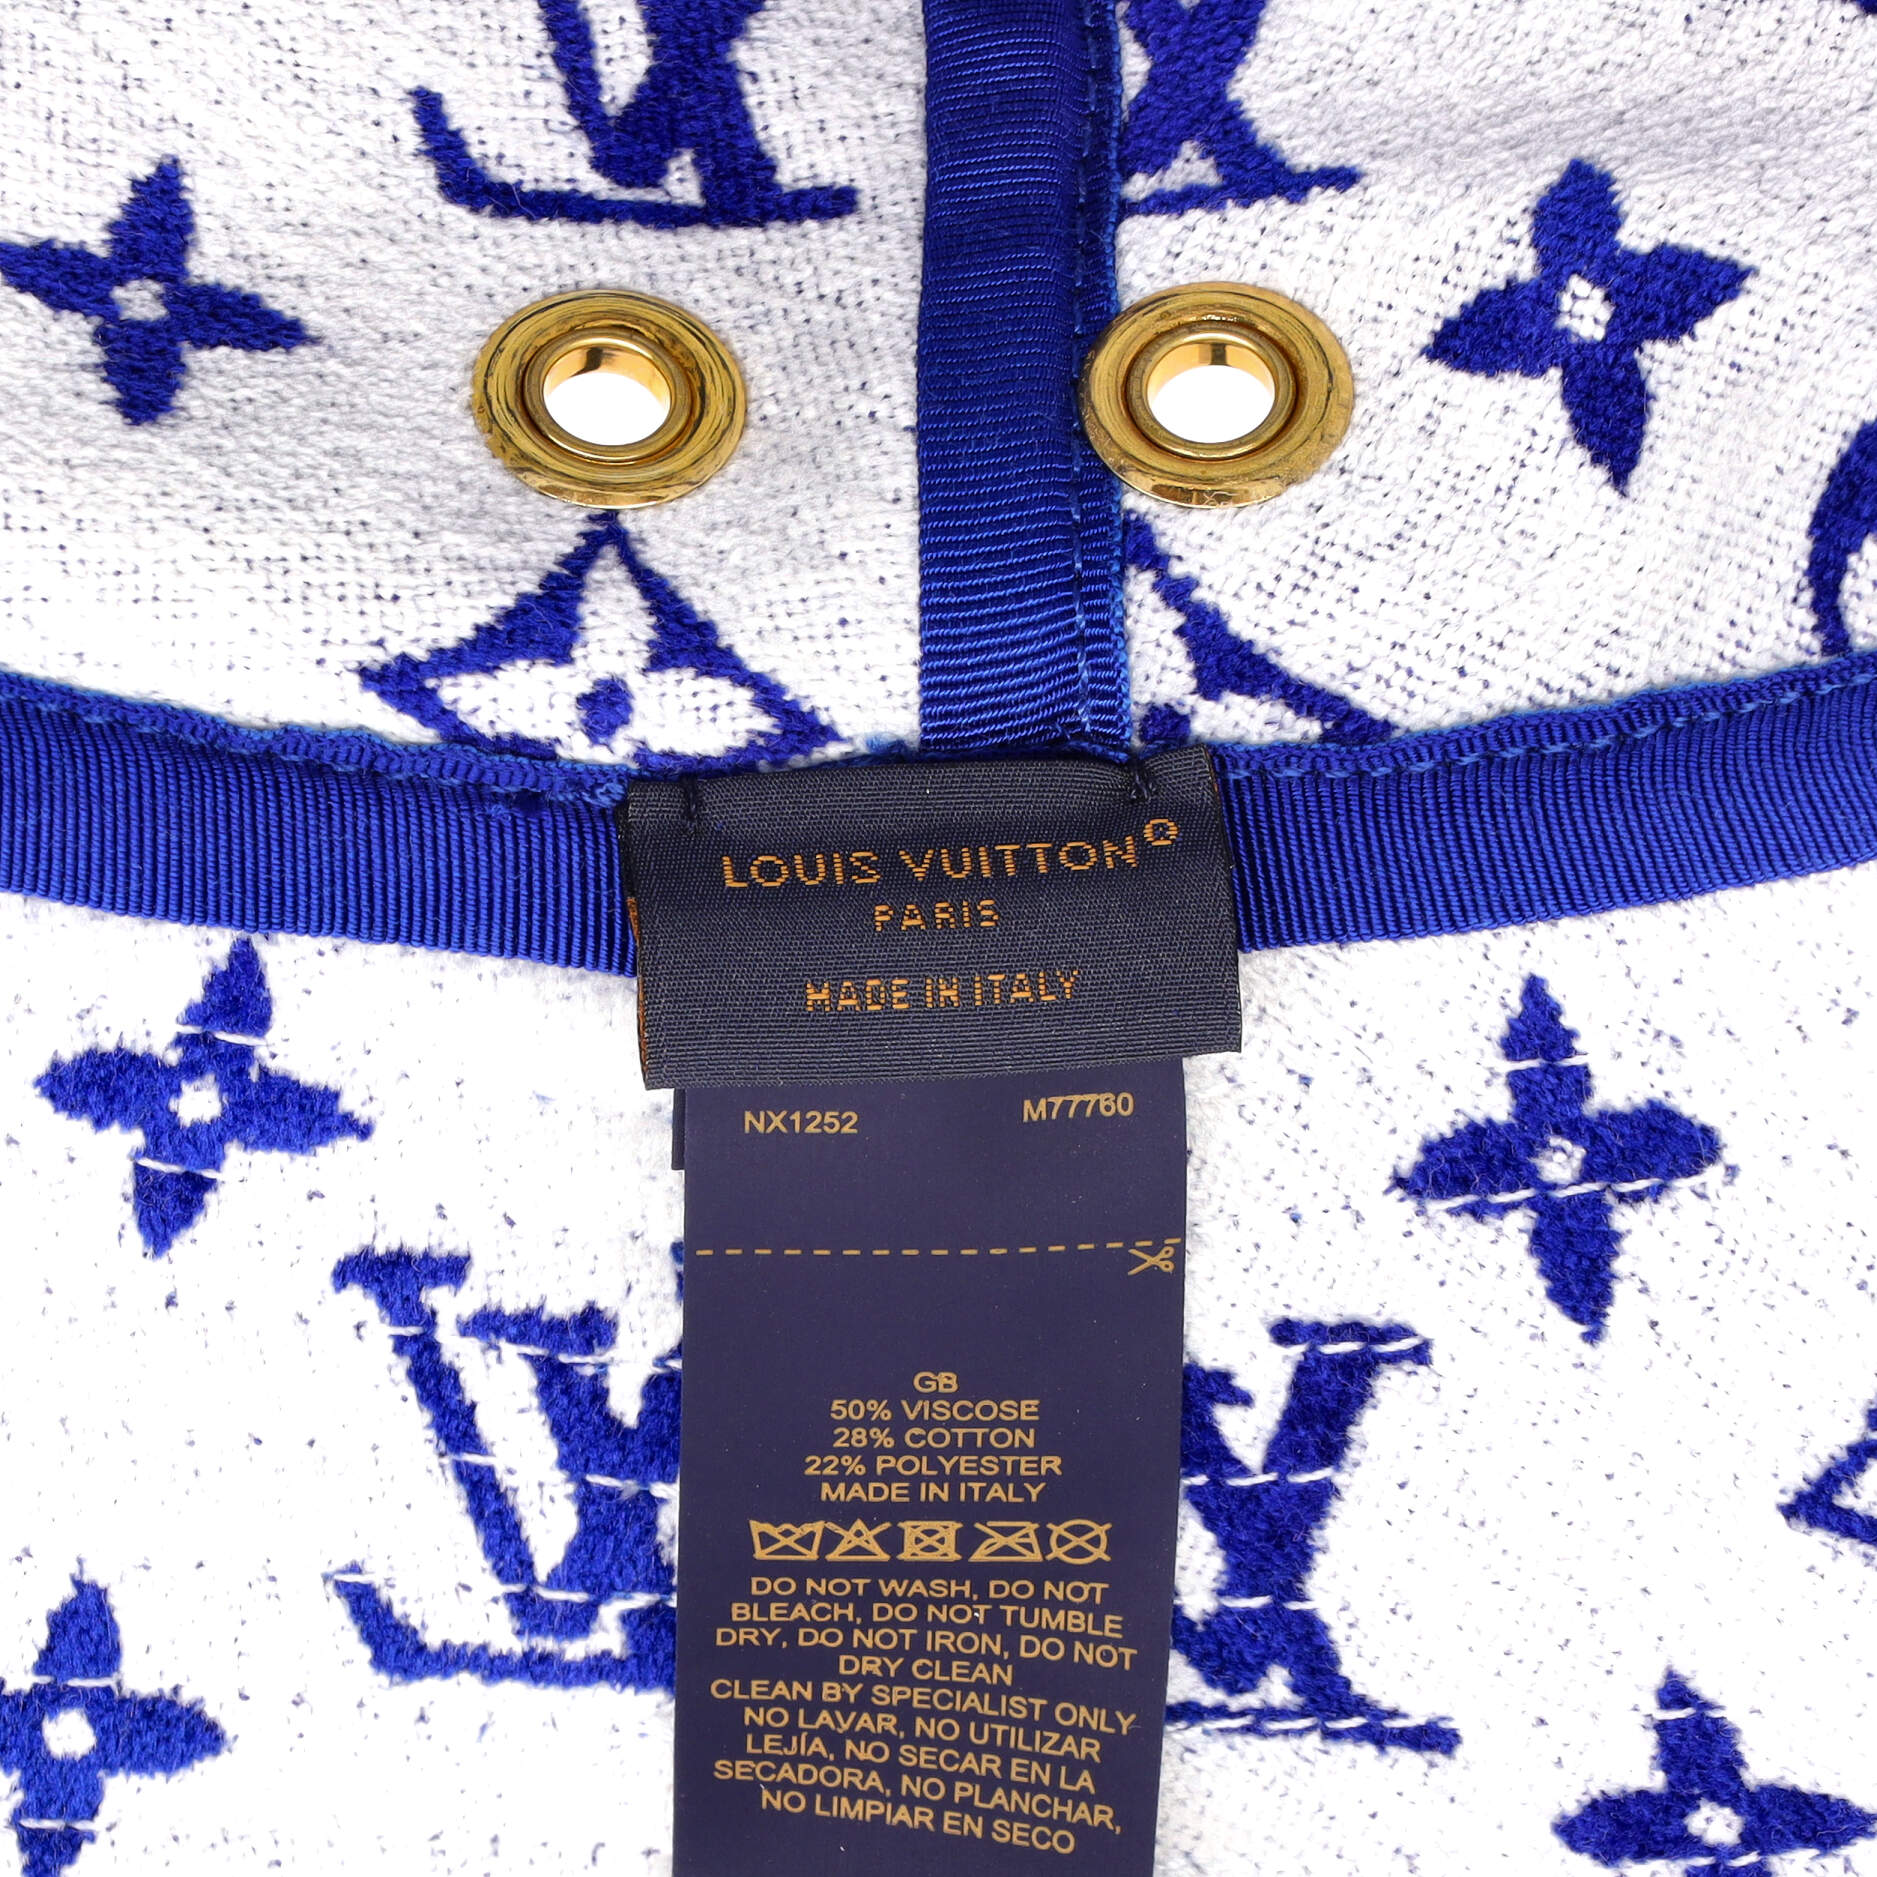 Louis Vuitton Monogram Teddy Chapkalaska Hat